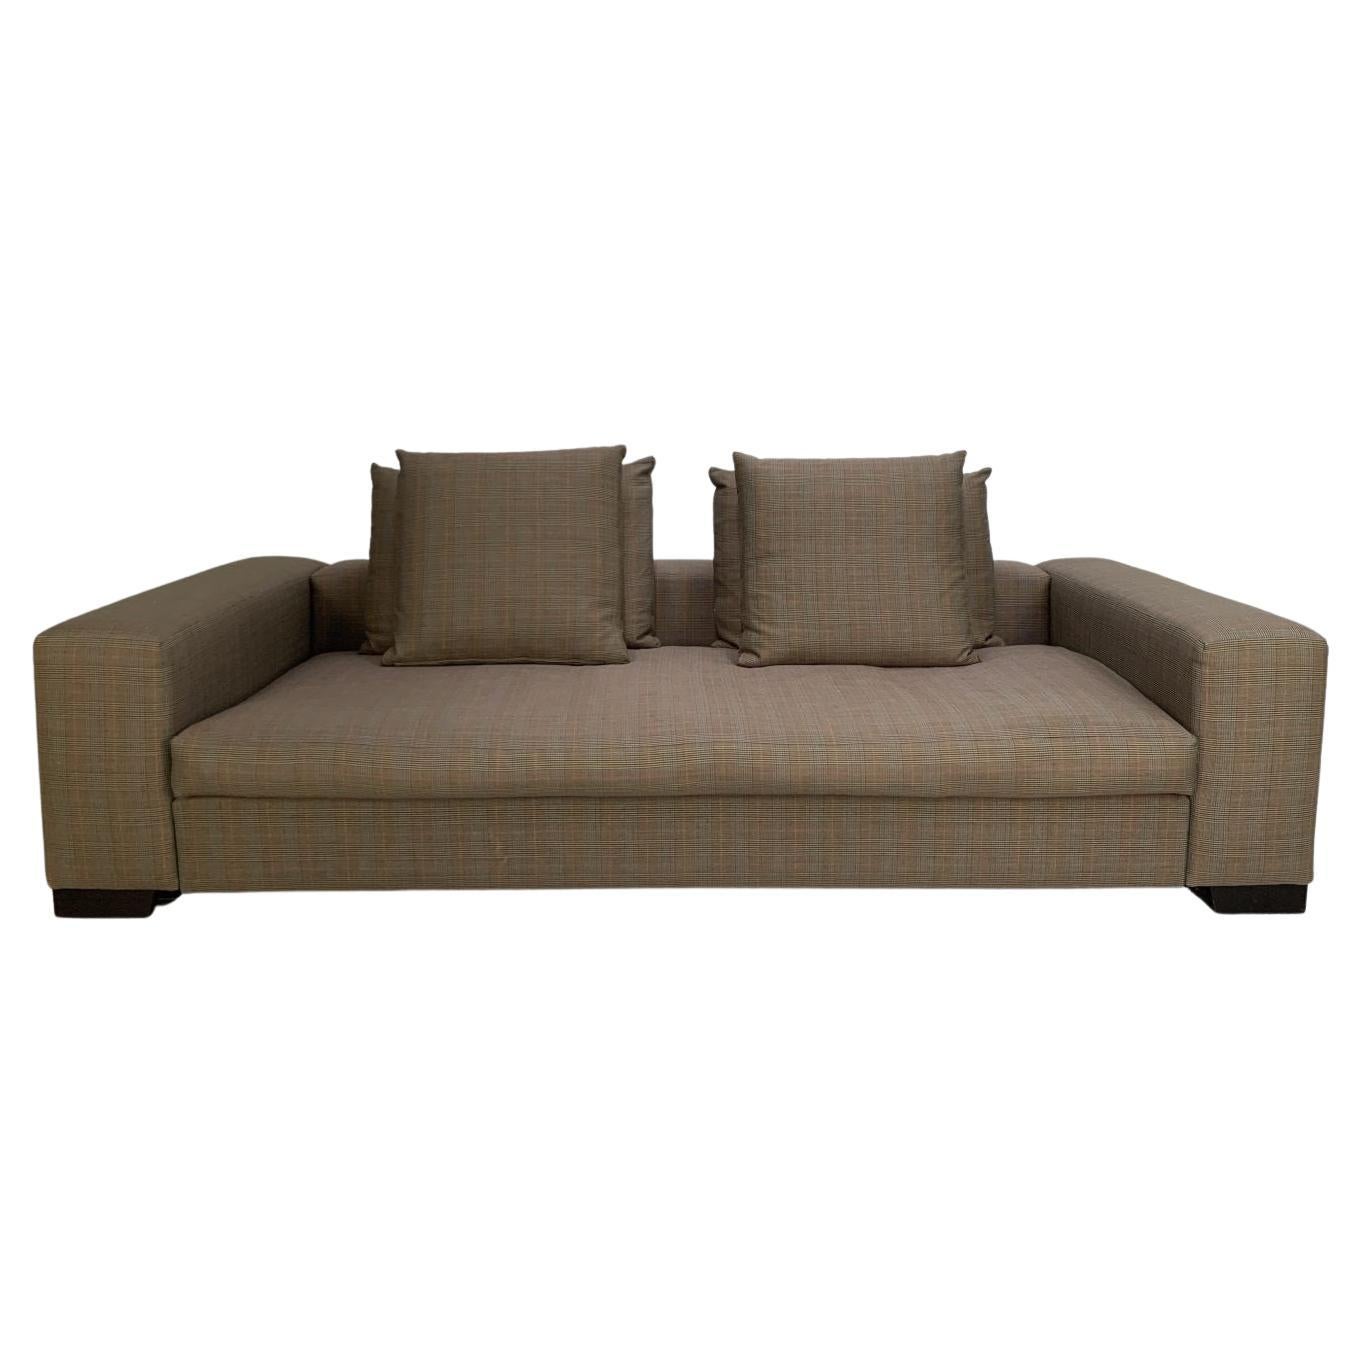 George Smith “Square” 4-Seat Sofa – In Ralph Lauren “Glen Plaid” Check For Sale